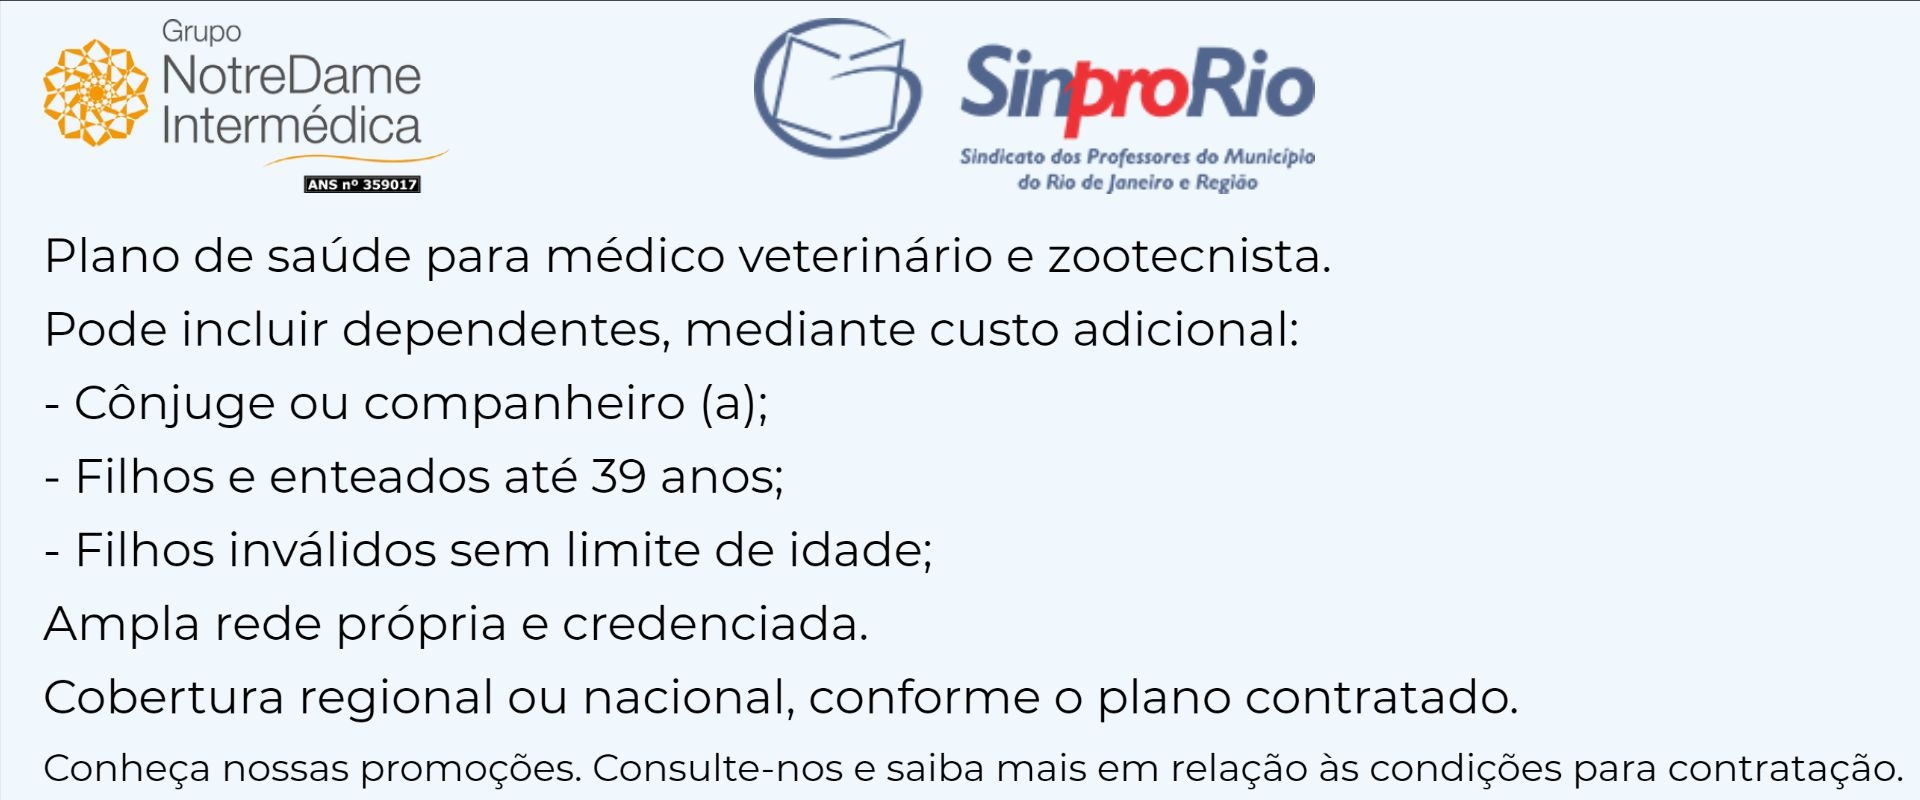 Notredame Intermédica Sinpro-RJ